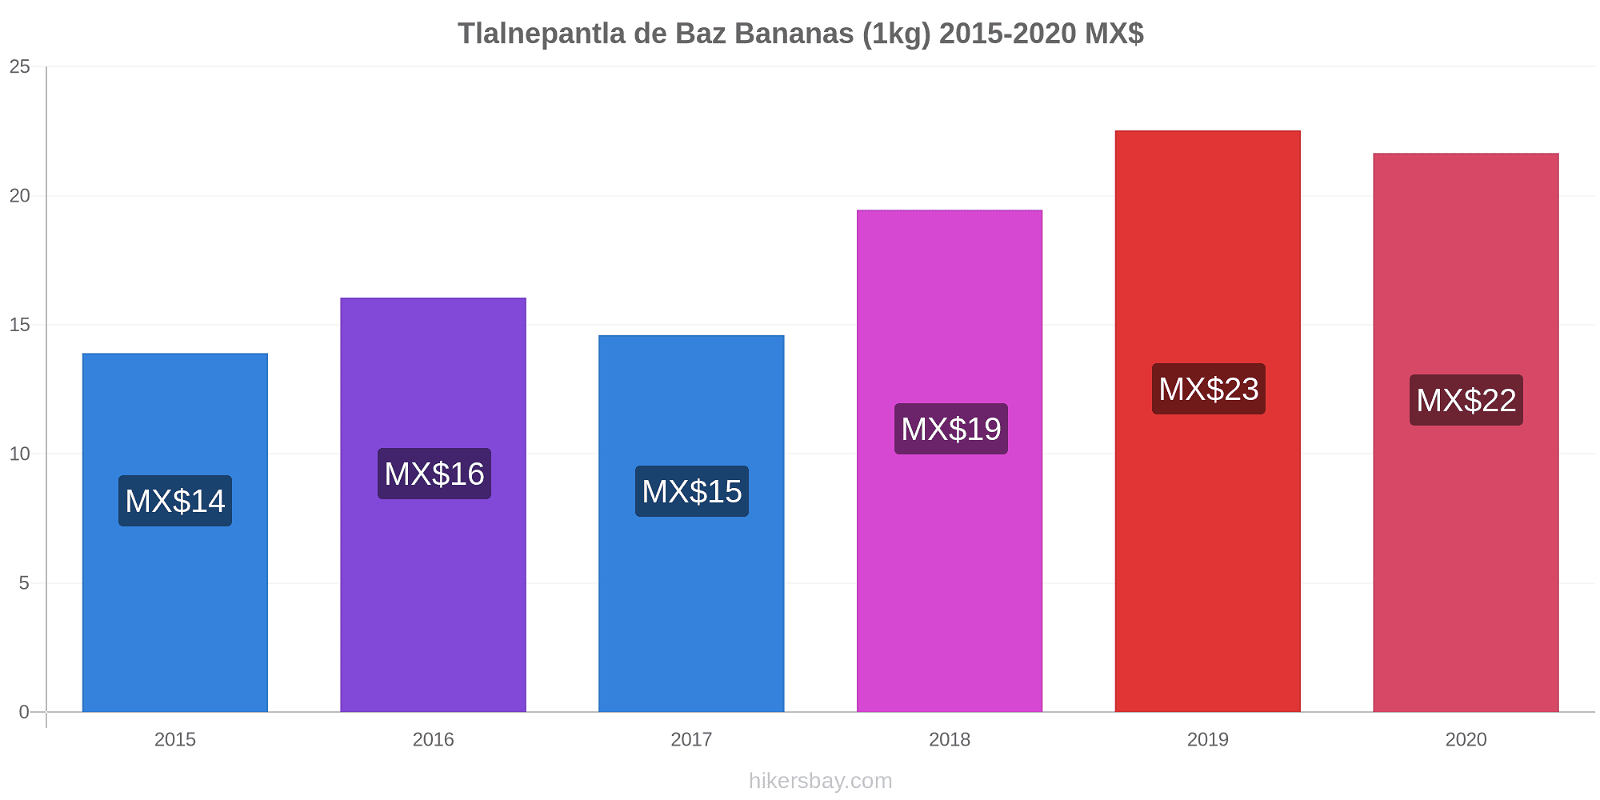 Tlalnepantla de Baz price changes Bananas (1kg) hikersbay.com